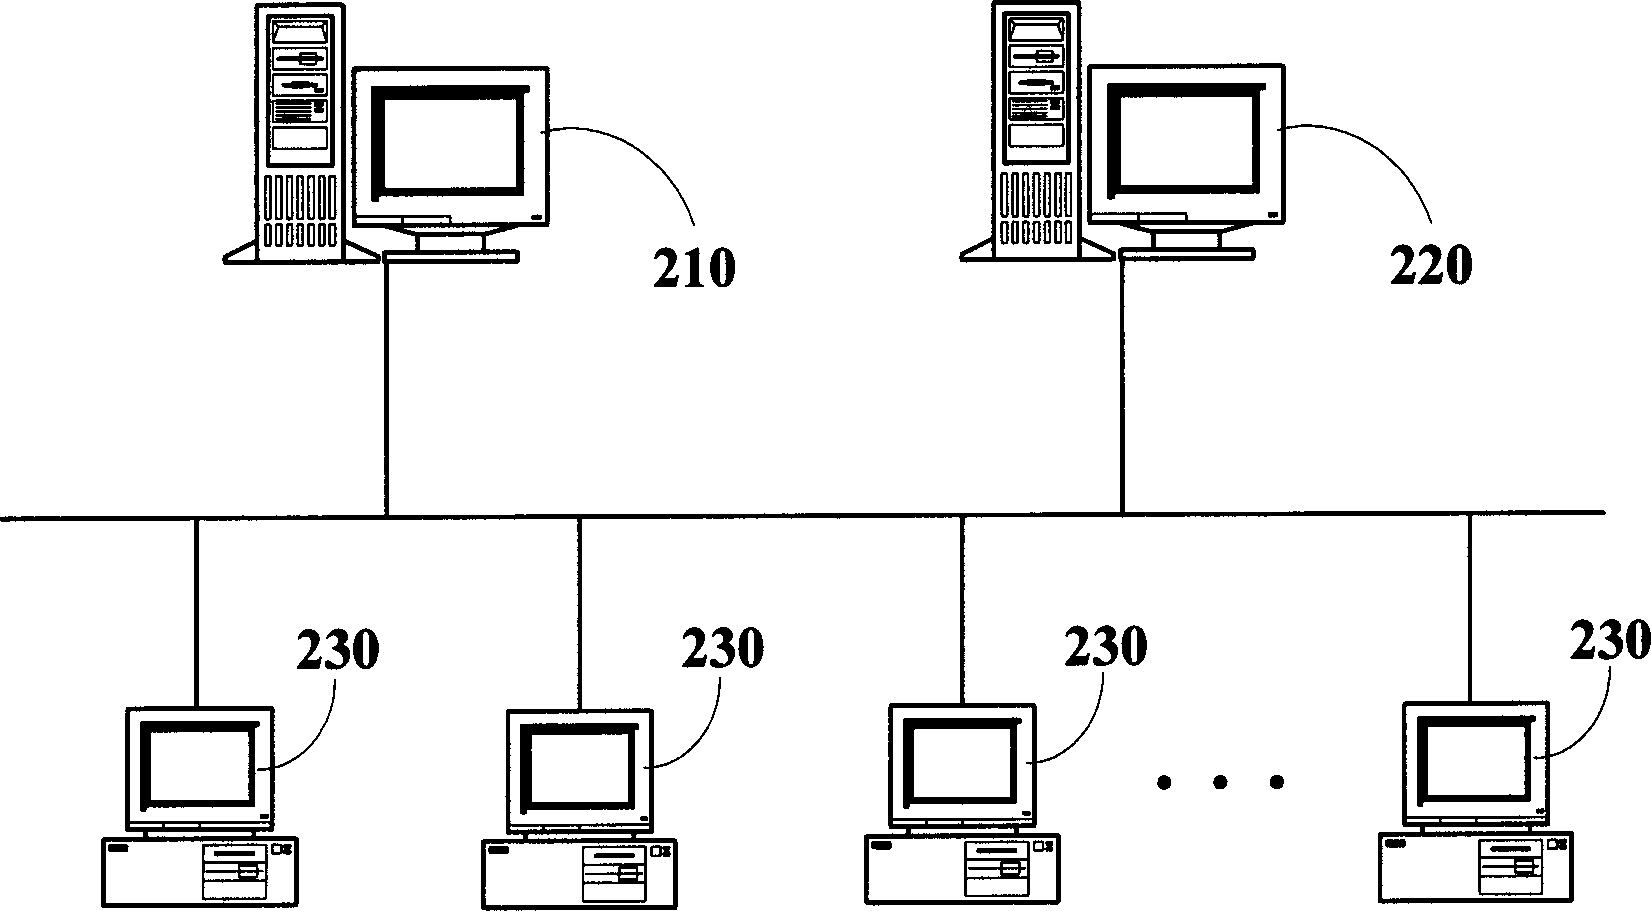 Computer testing method